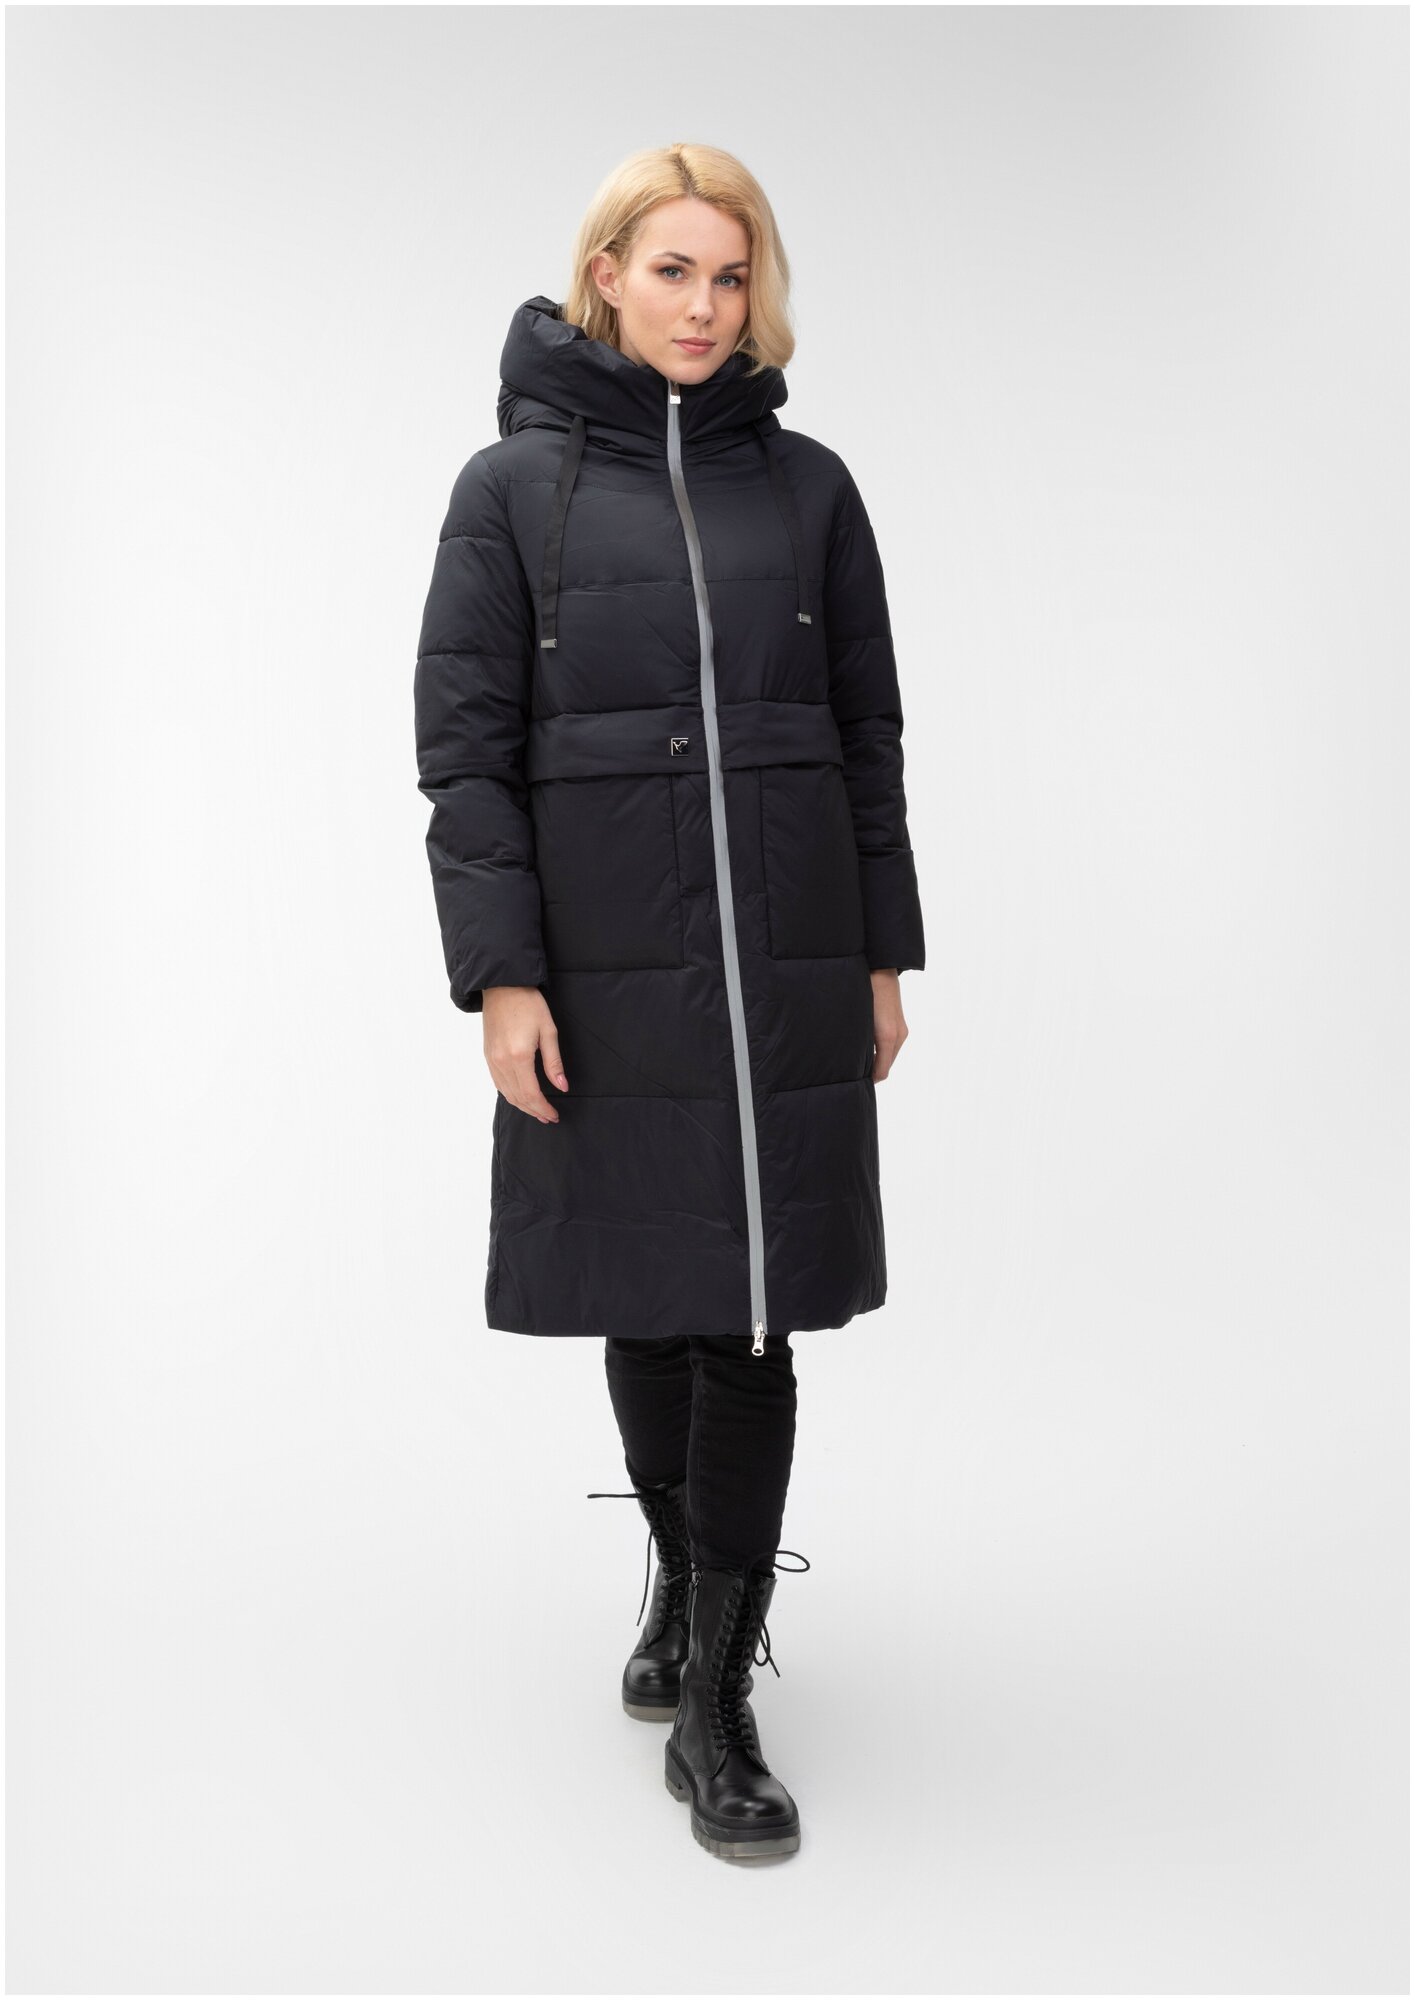 Пальто женское HANNA AVI A-90050 